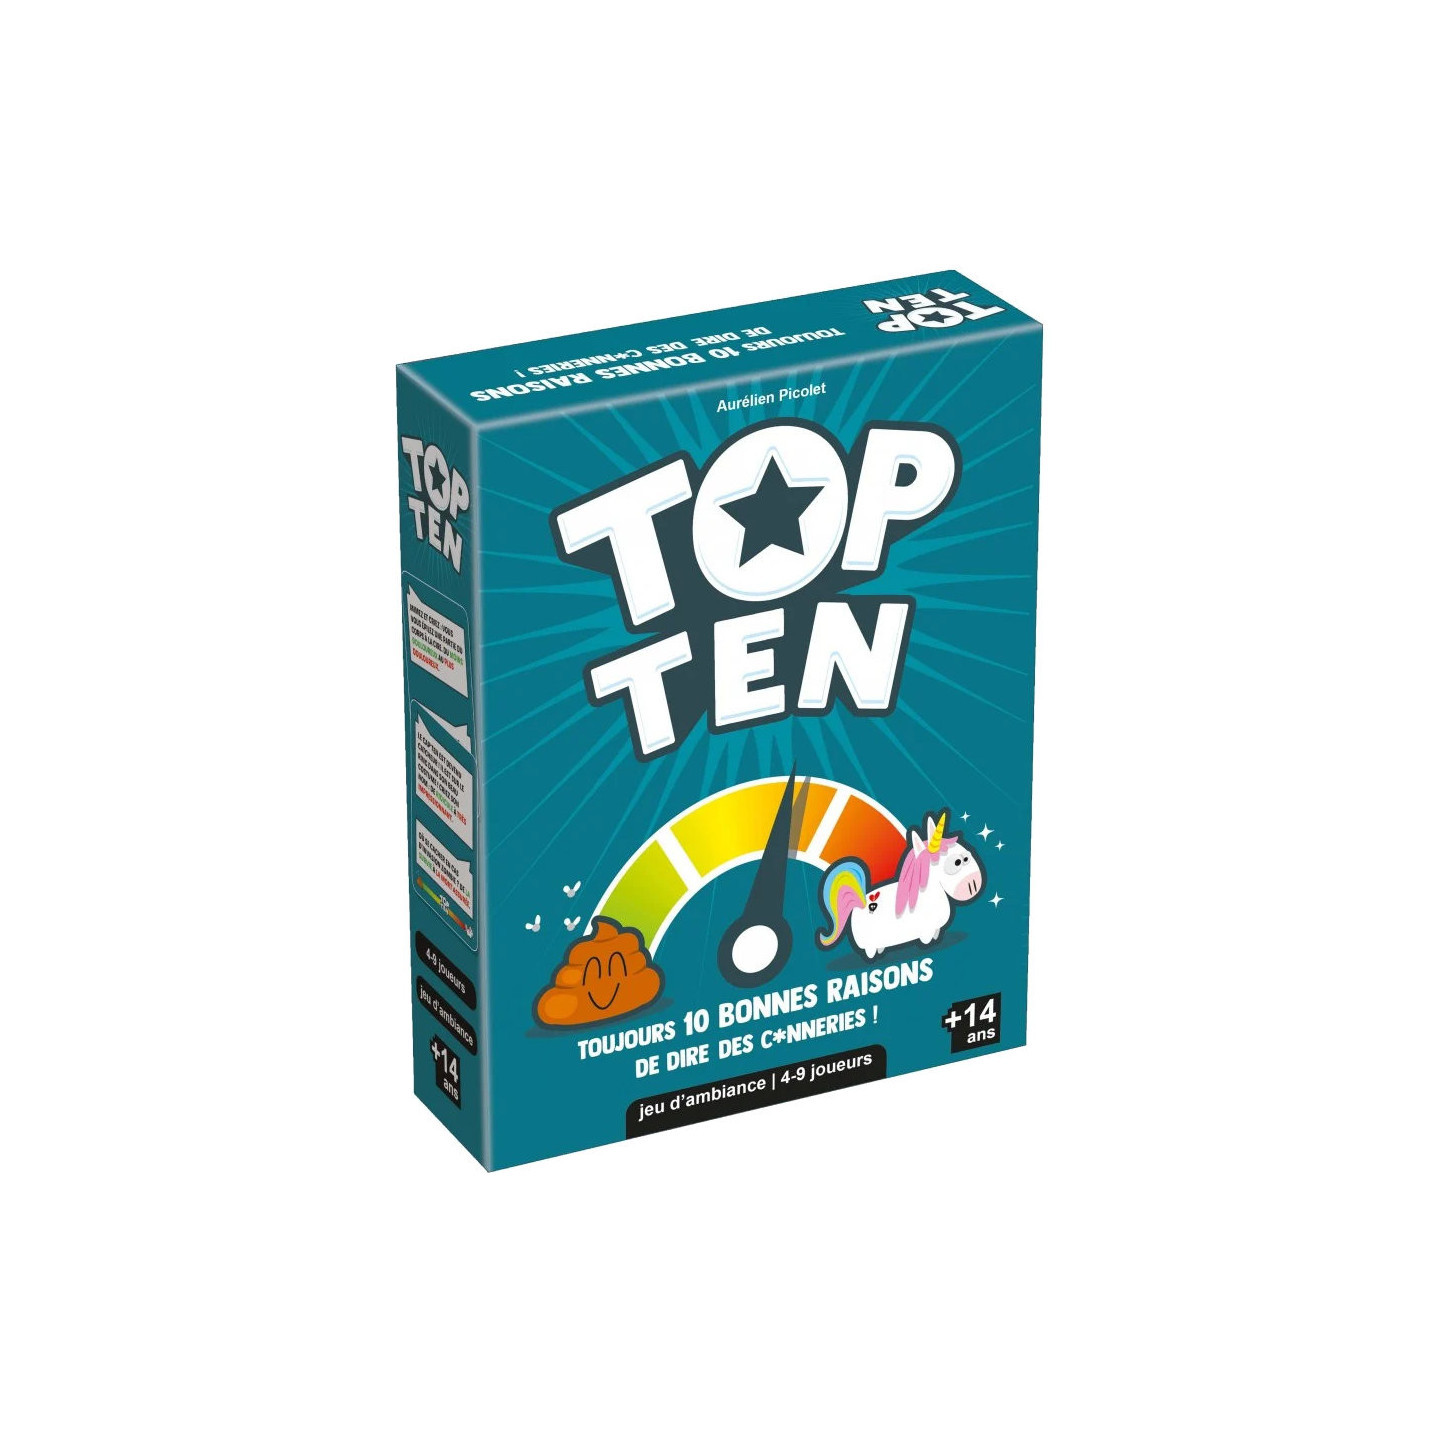 Top ten - jeu d'ambiance coopératif - Cocktail Games